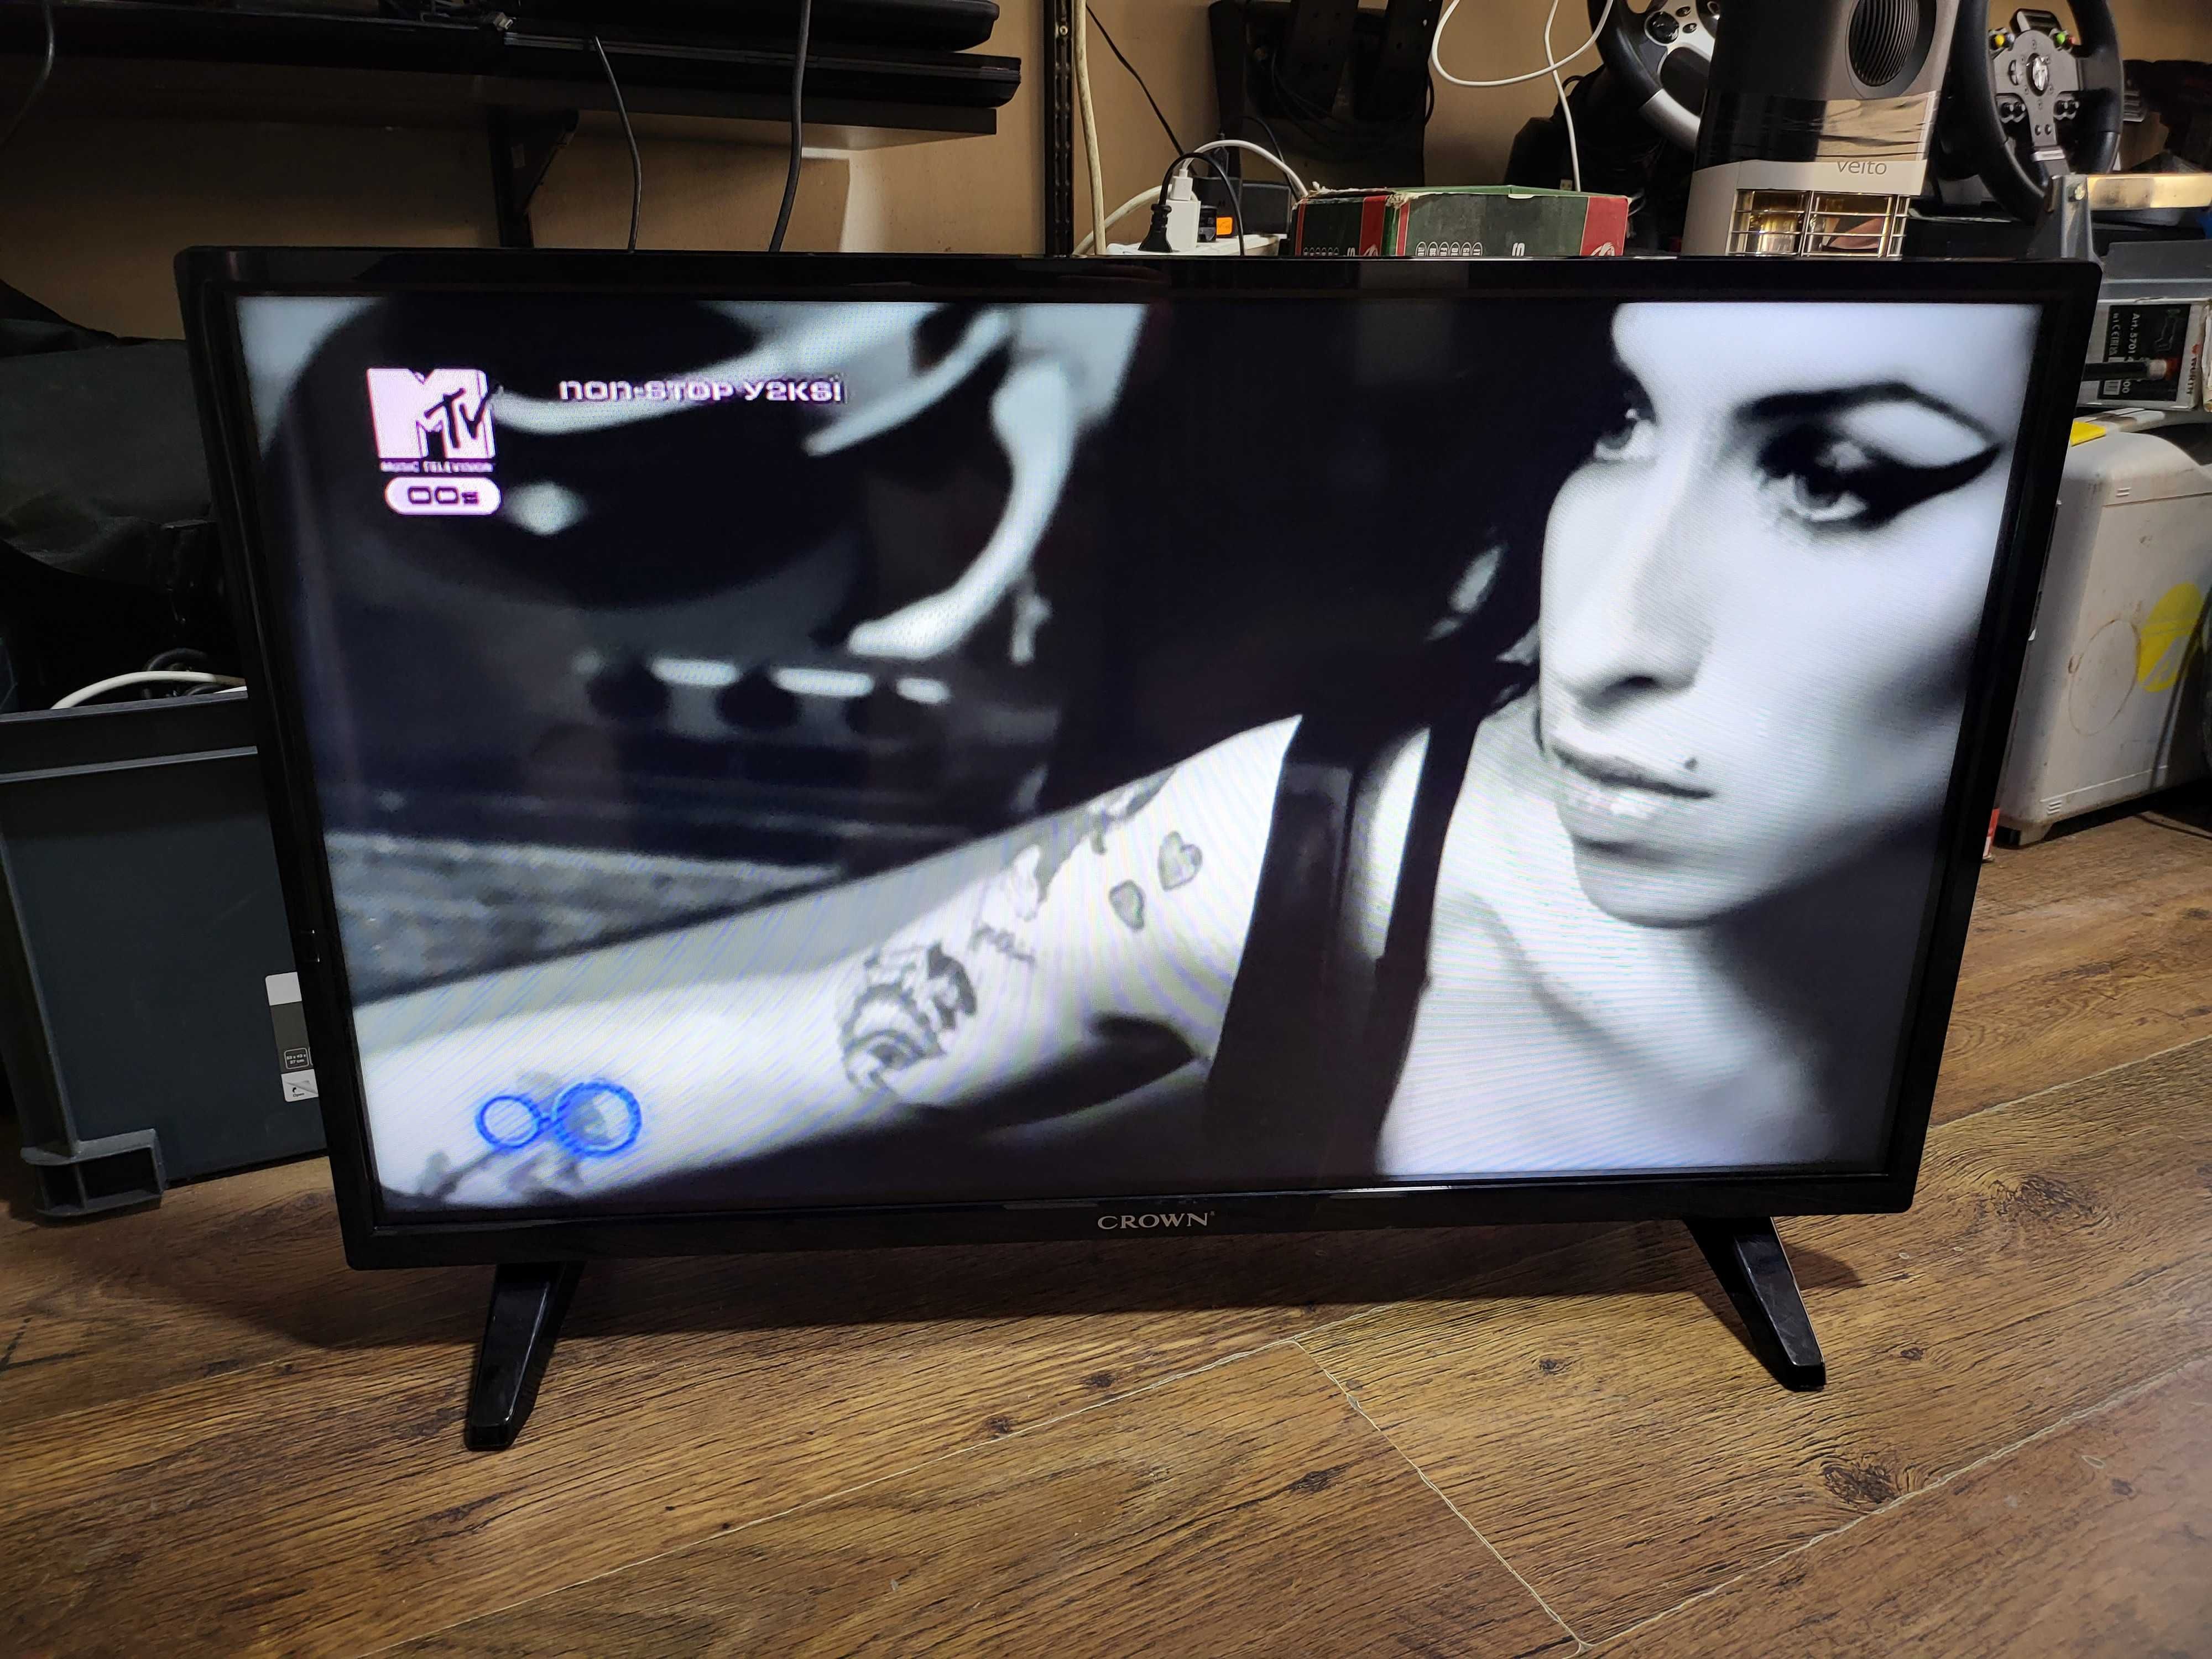 Телевизор Crown 32550 , HD Ready , 32 inch, 81 см, LED LCD